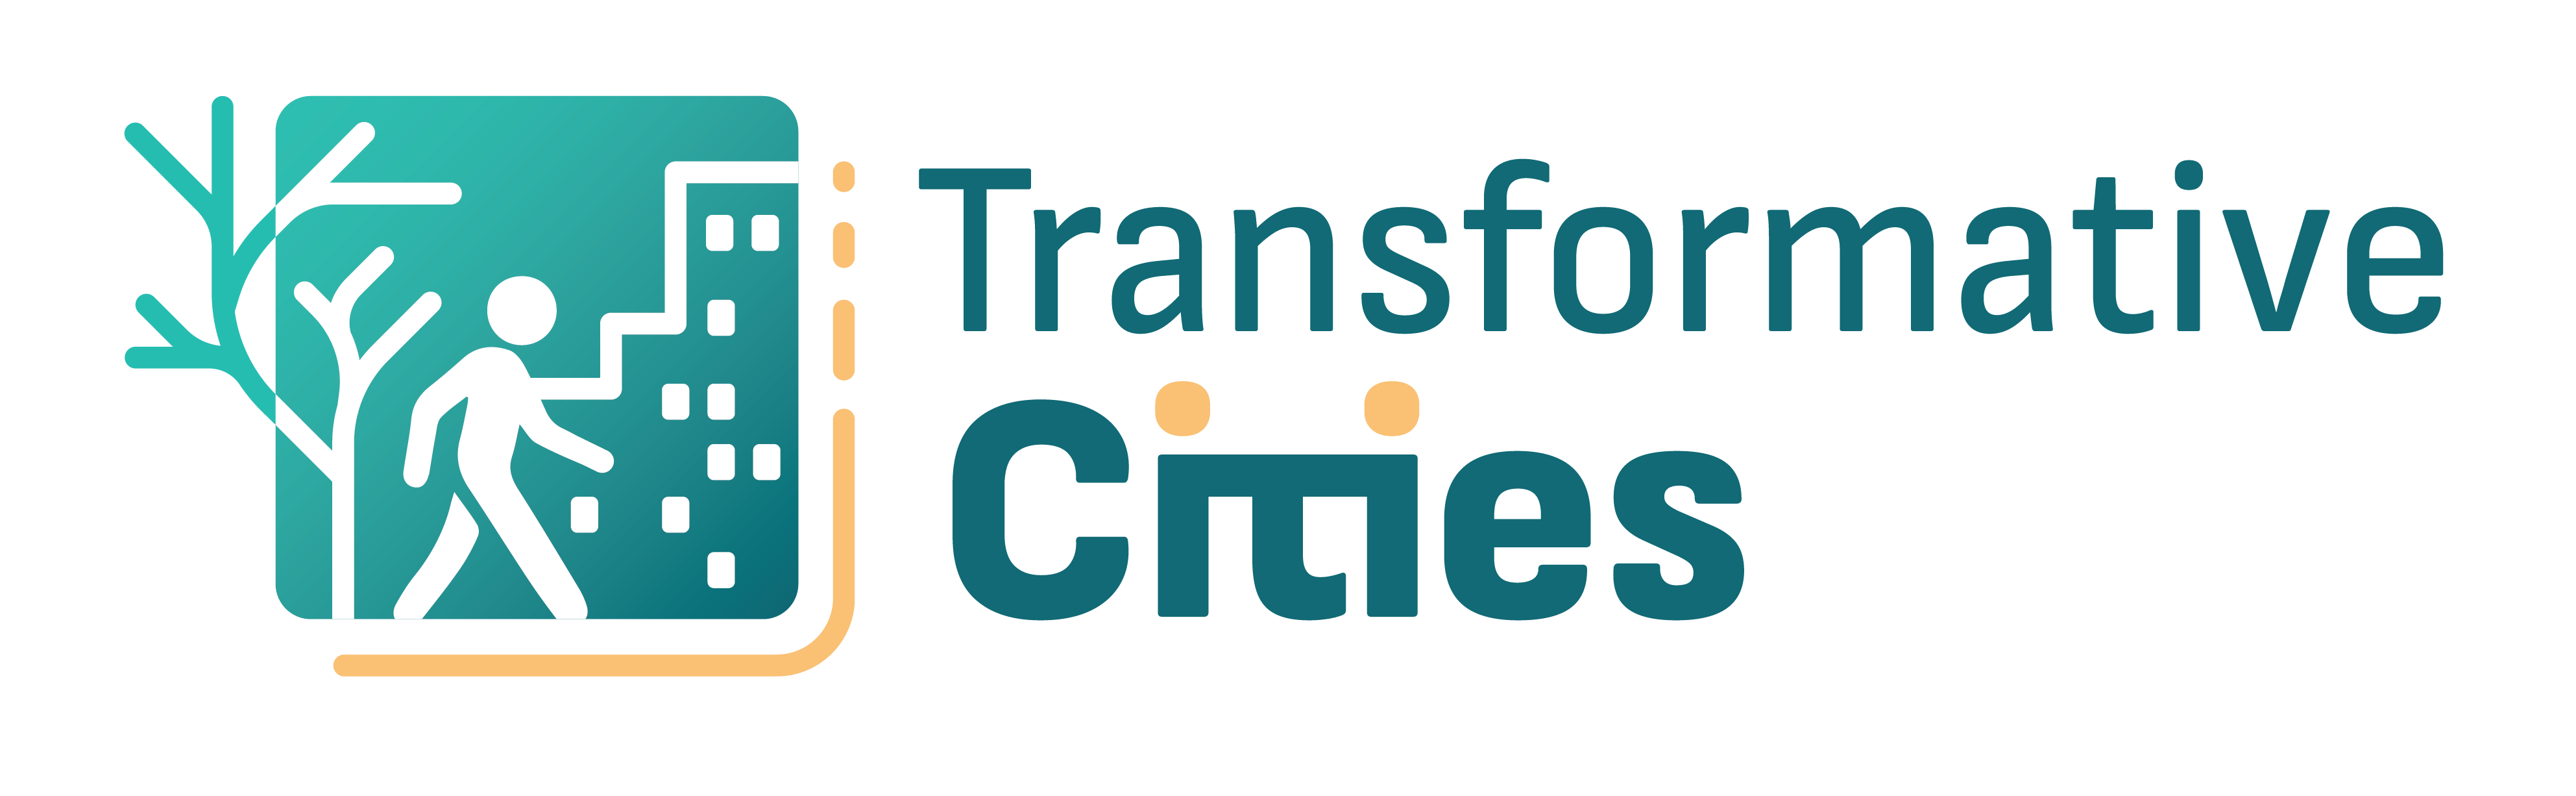 Transformative Cities -logo